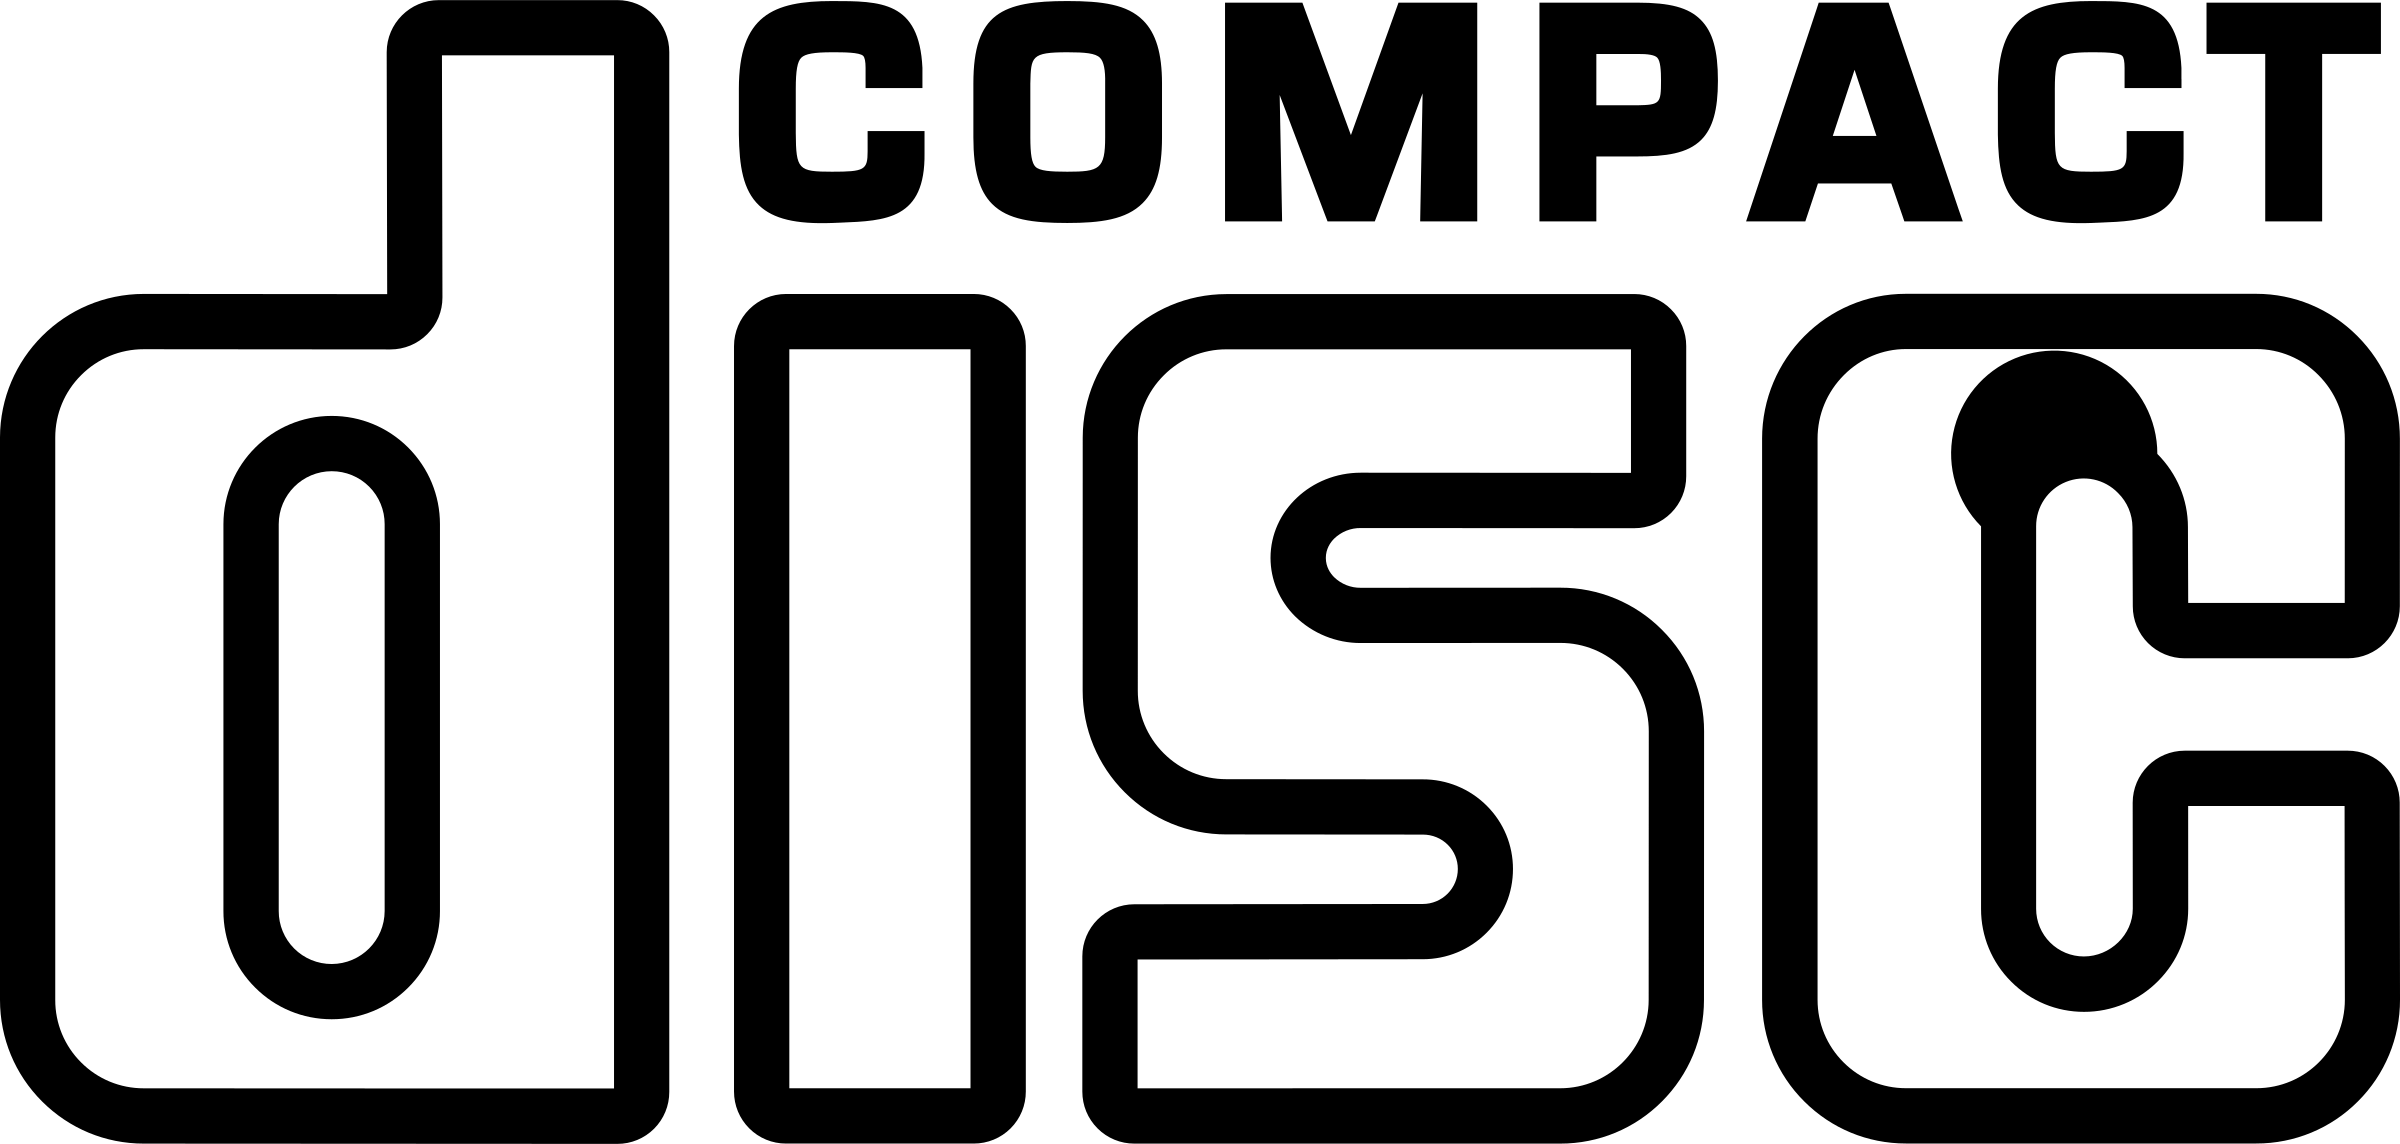 Compact disc logo PNG, transparent png download